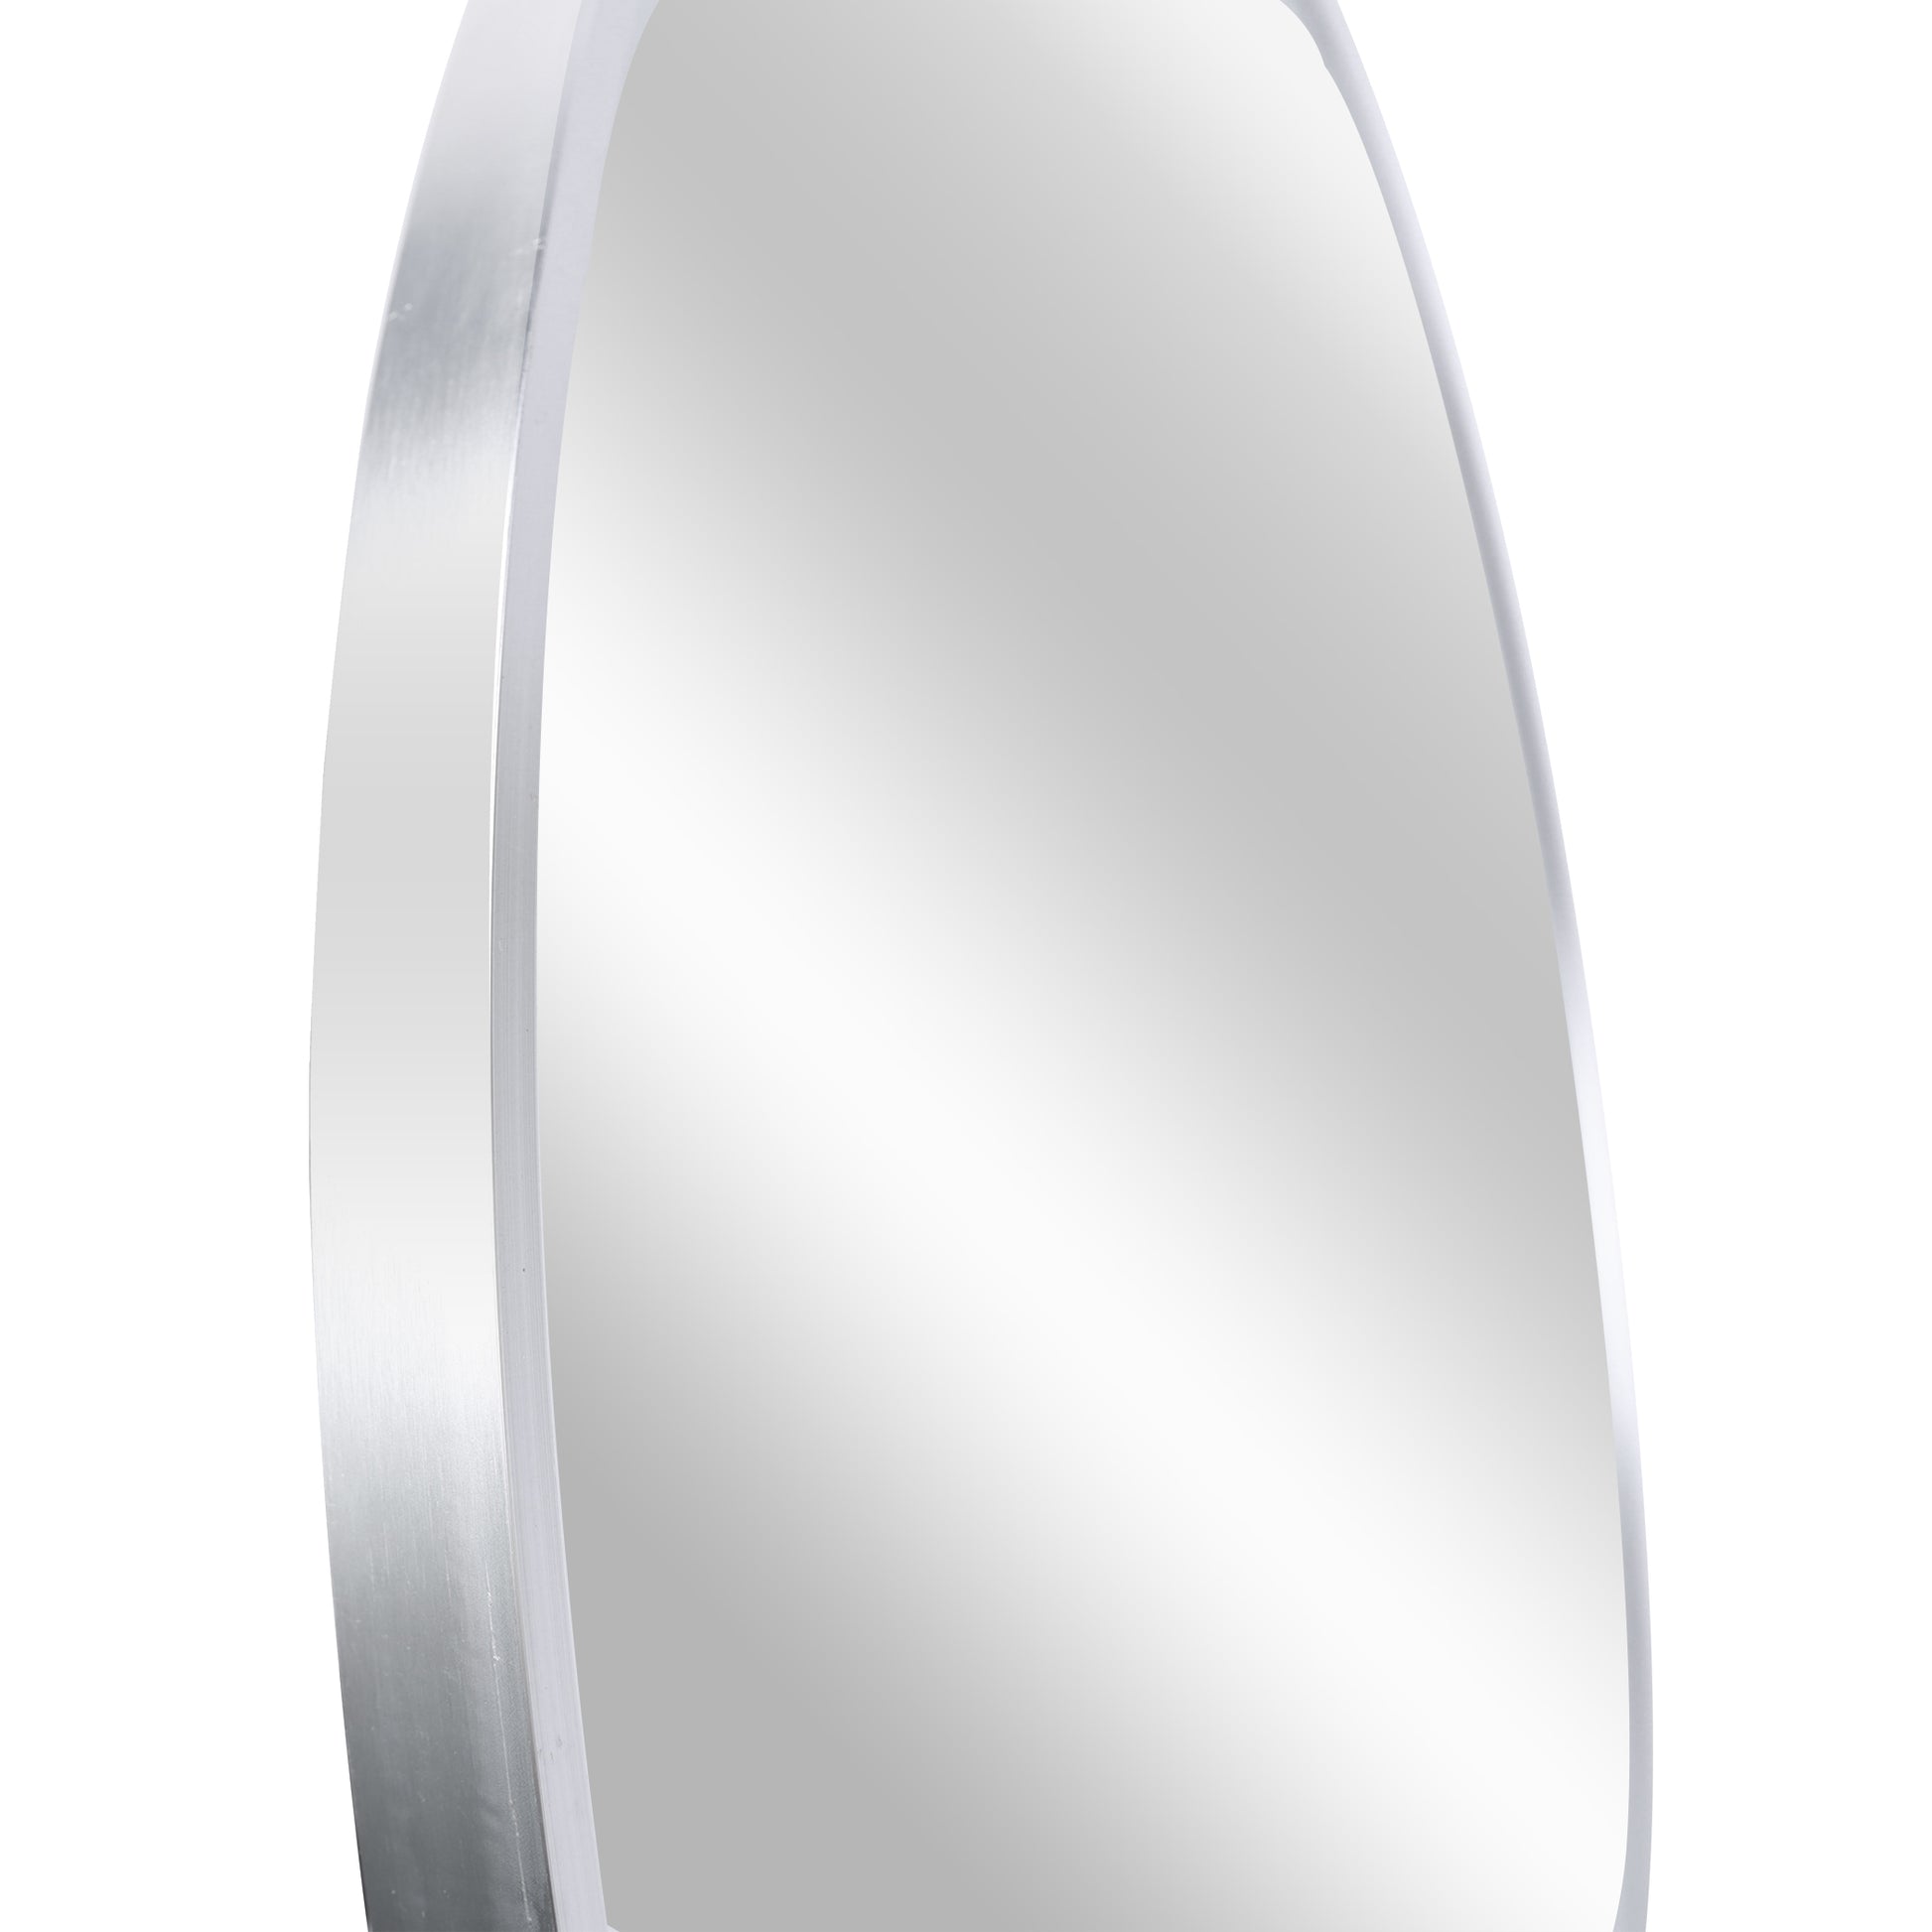 Silver 32 Inch Metal Round Bathroom Mirror silver-classic-mdf+glass-aluminium alloy